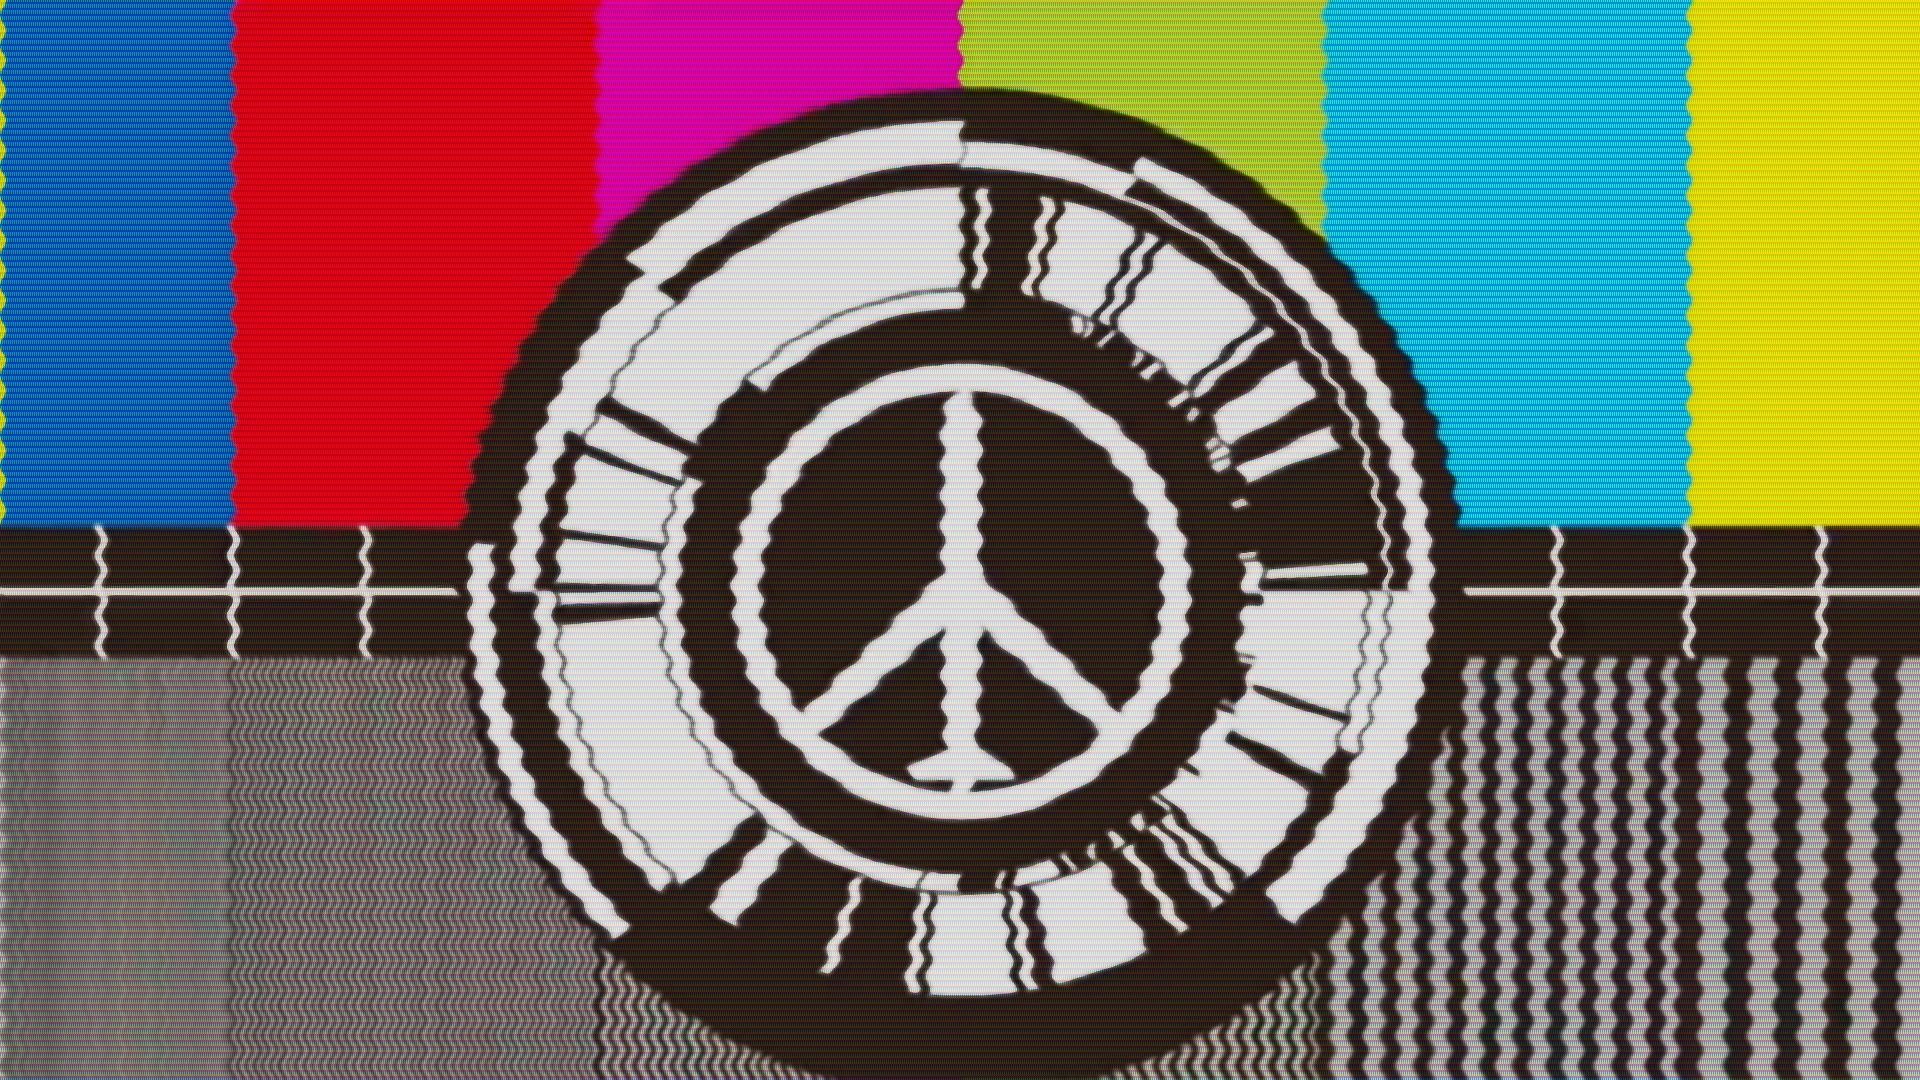 Free download Metal Gear Solid Peace Walker wallpaper 1024223 [1920x1080] for your Desktop, Mobile & Tablet. Explore Peace Walker Wallpaper. MGS Peace Walker Wallpaper